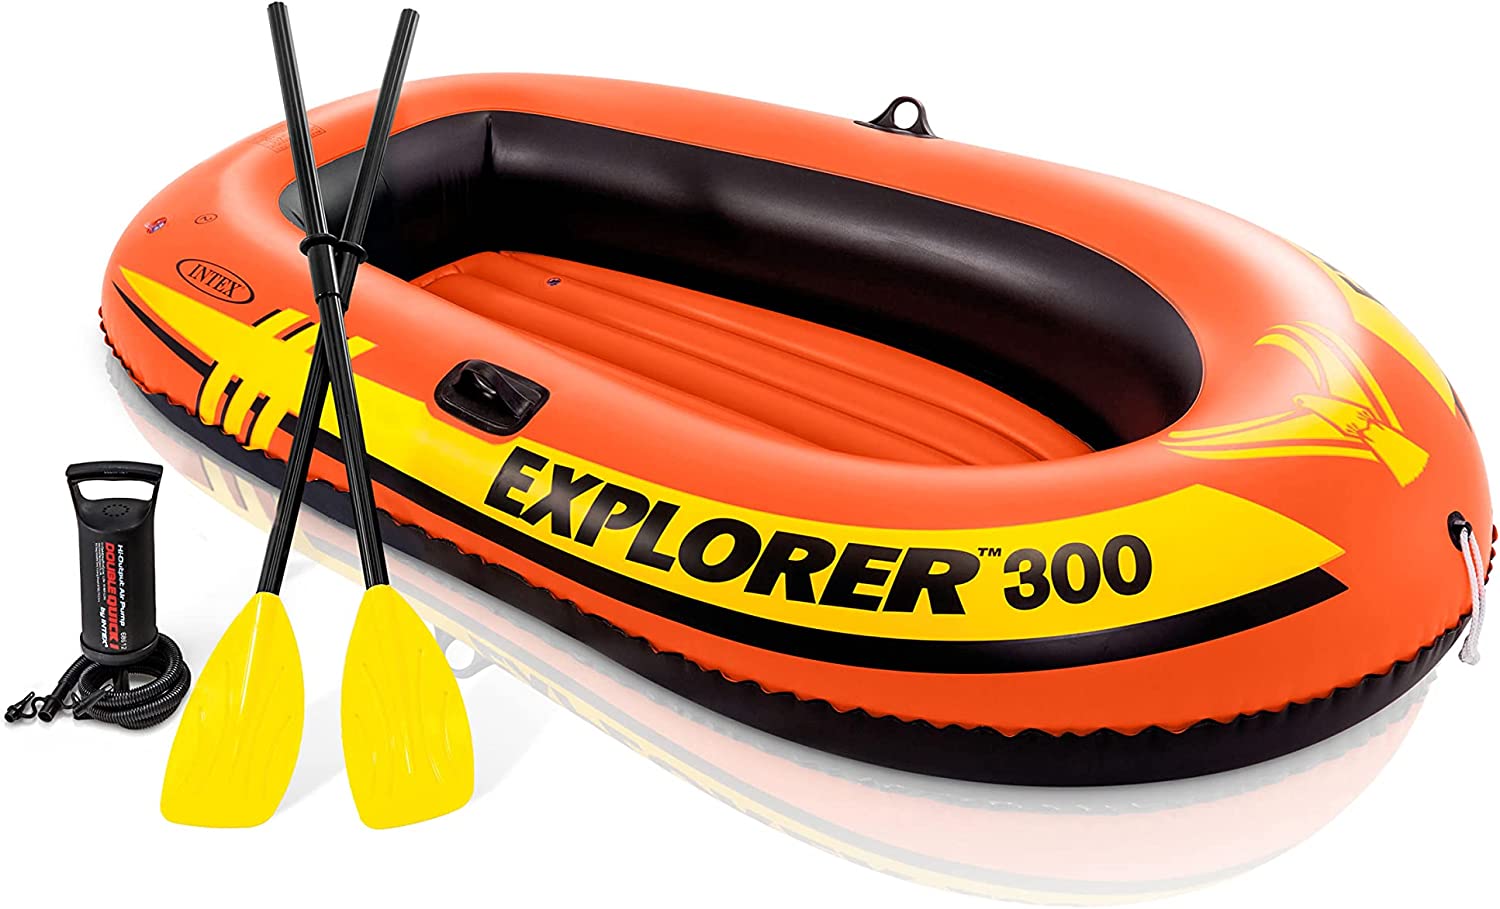 Explorer 300 Inflatable Boat